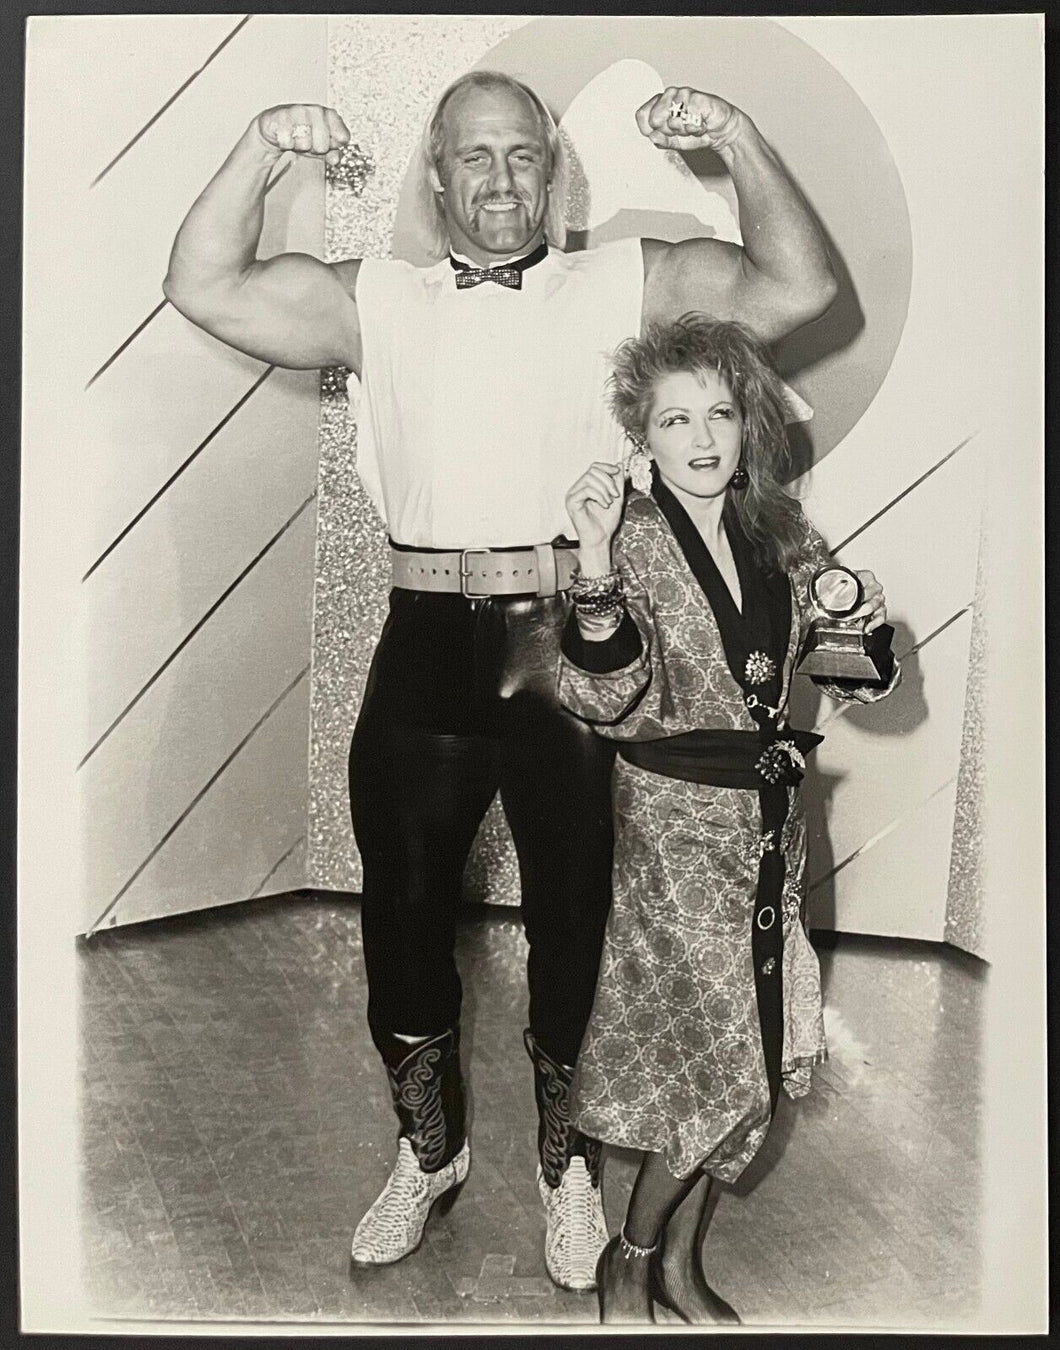 1985 Cyndi Lauper + Hulk Hogan Wrestling Star Photo Red Carpet Grammy Awards